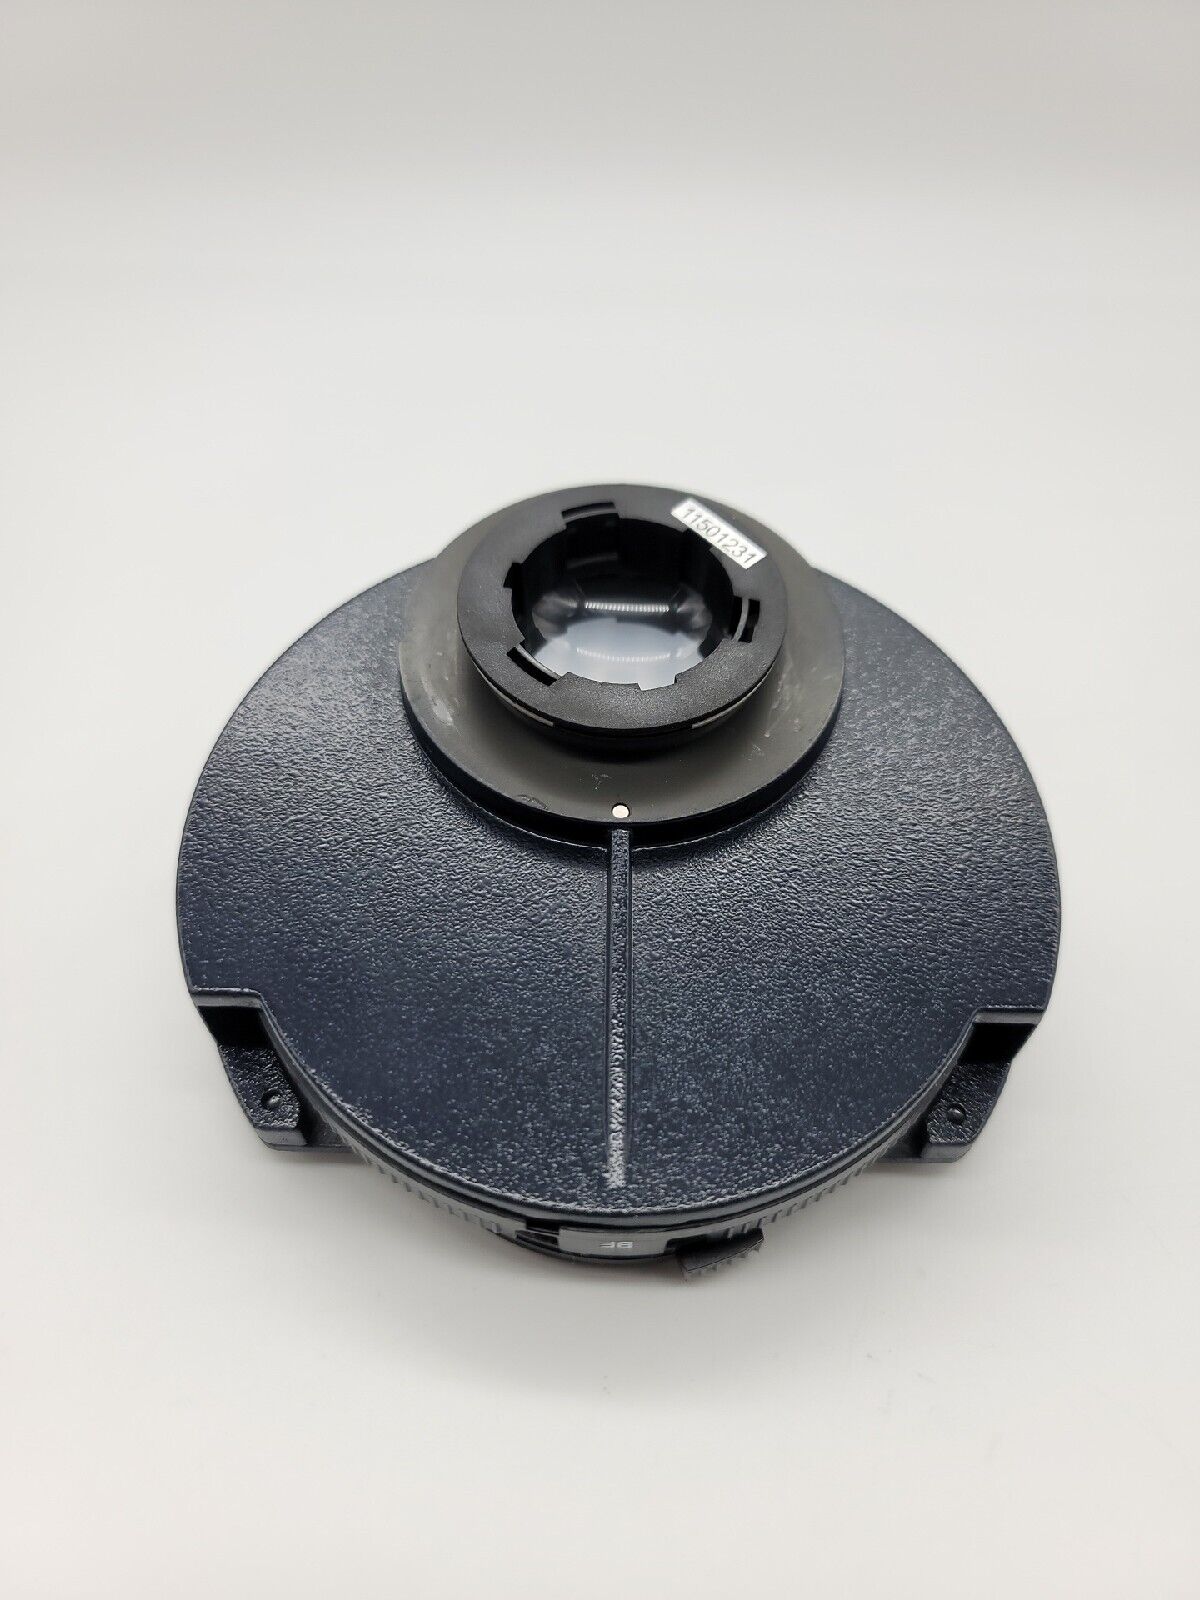 Leica Microscope Phase Condenser 501159 - microscopemarketplace